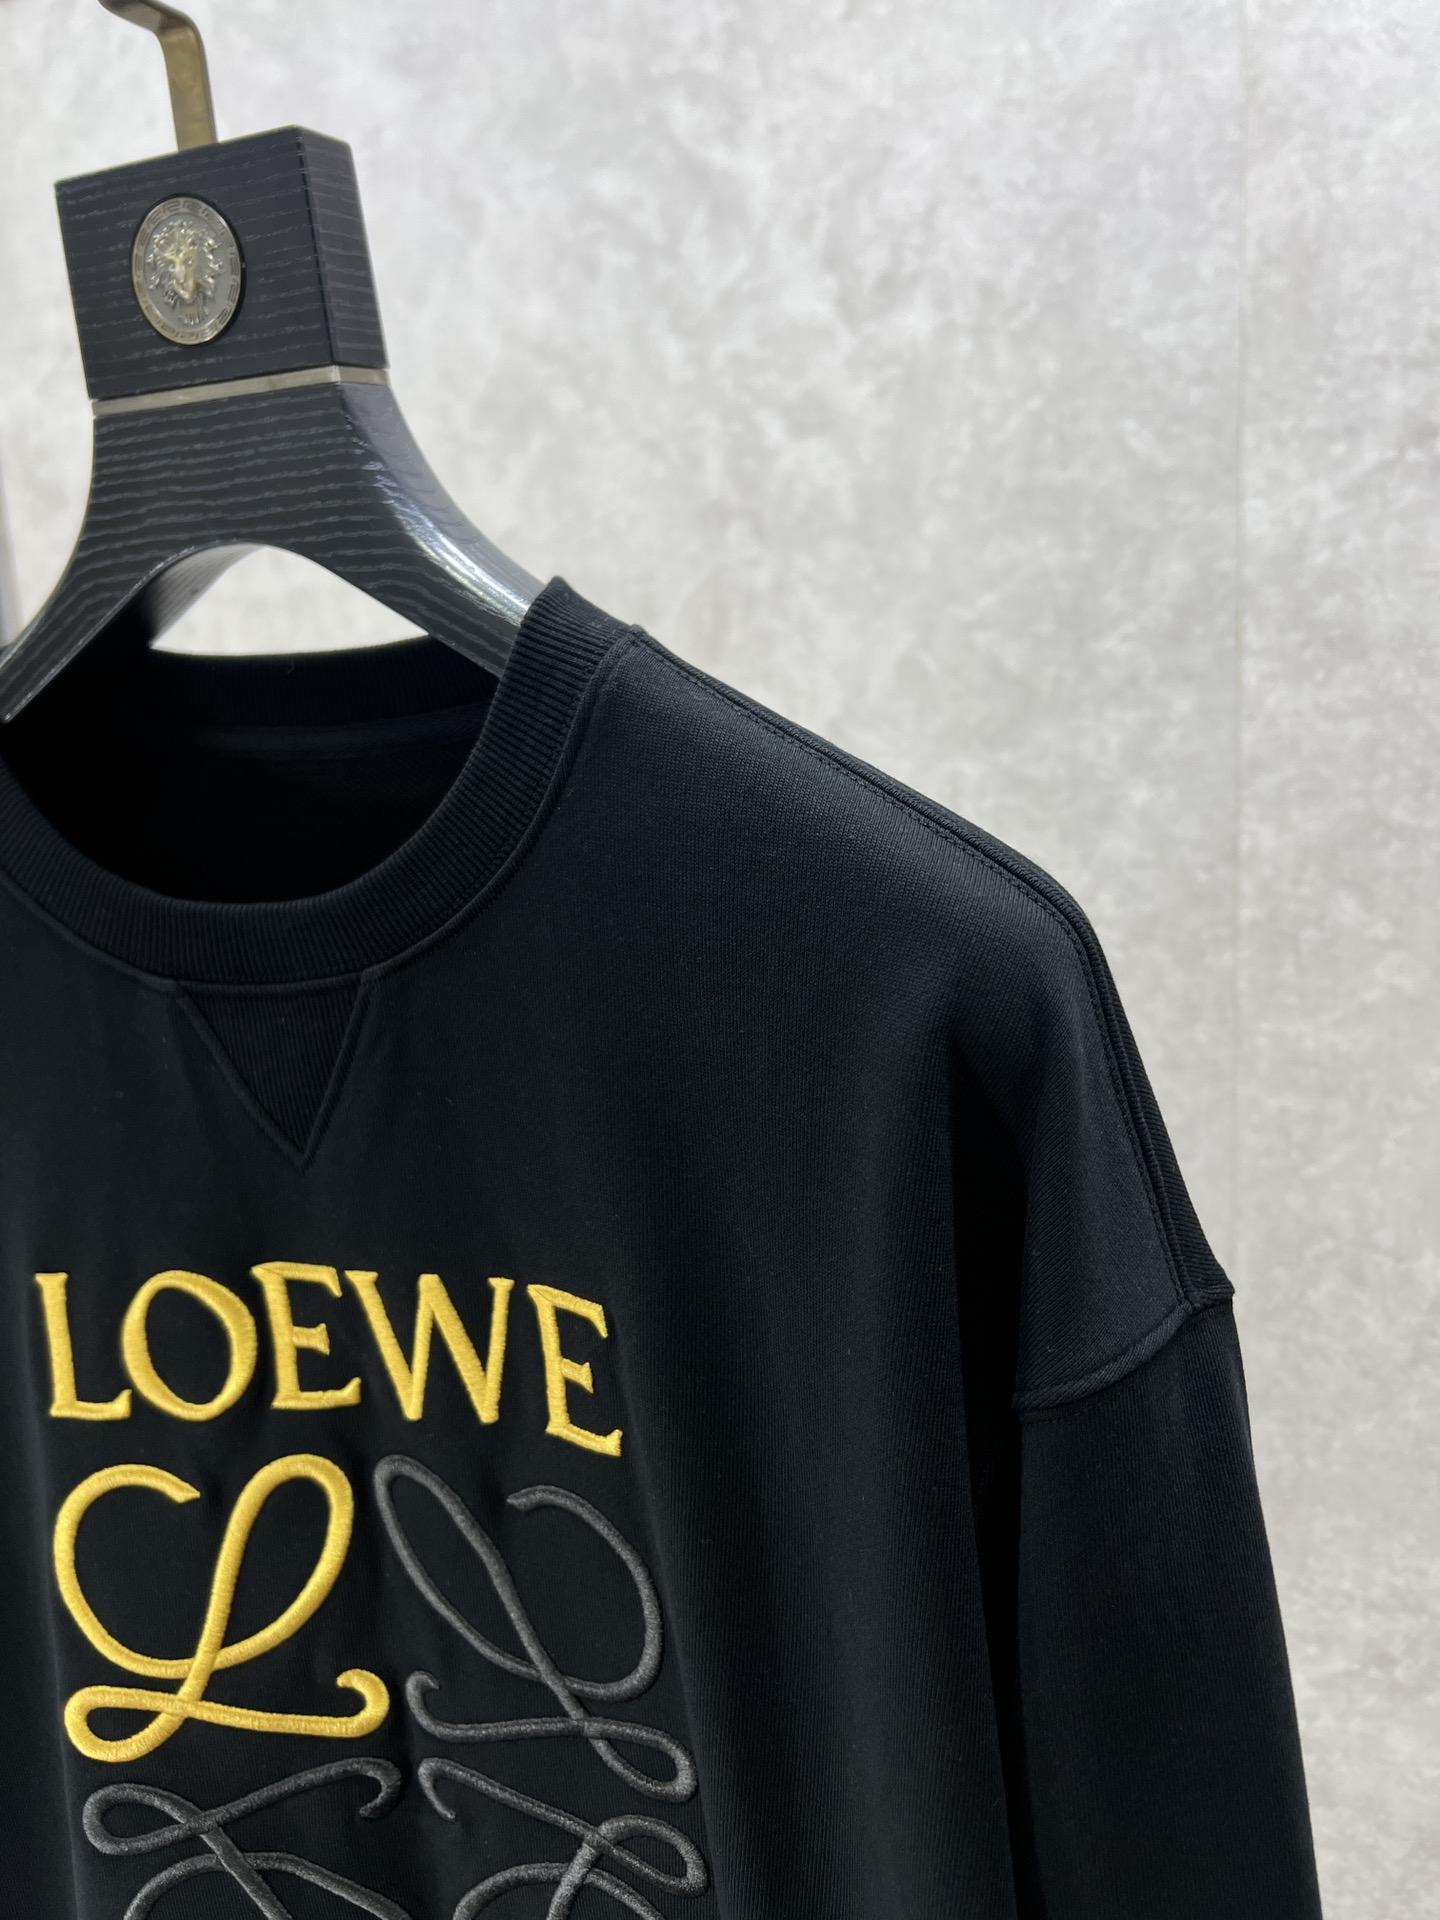 LOEWE罗意威最新秋季男装长袖卫衣选用进口120支针织定制面料亲肤舒适具有透气吸汗性能摸上去手感非常的